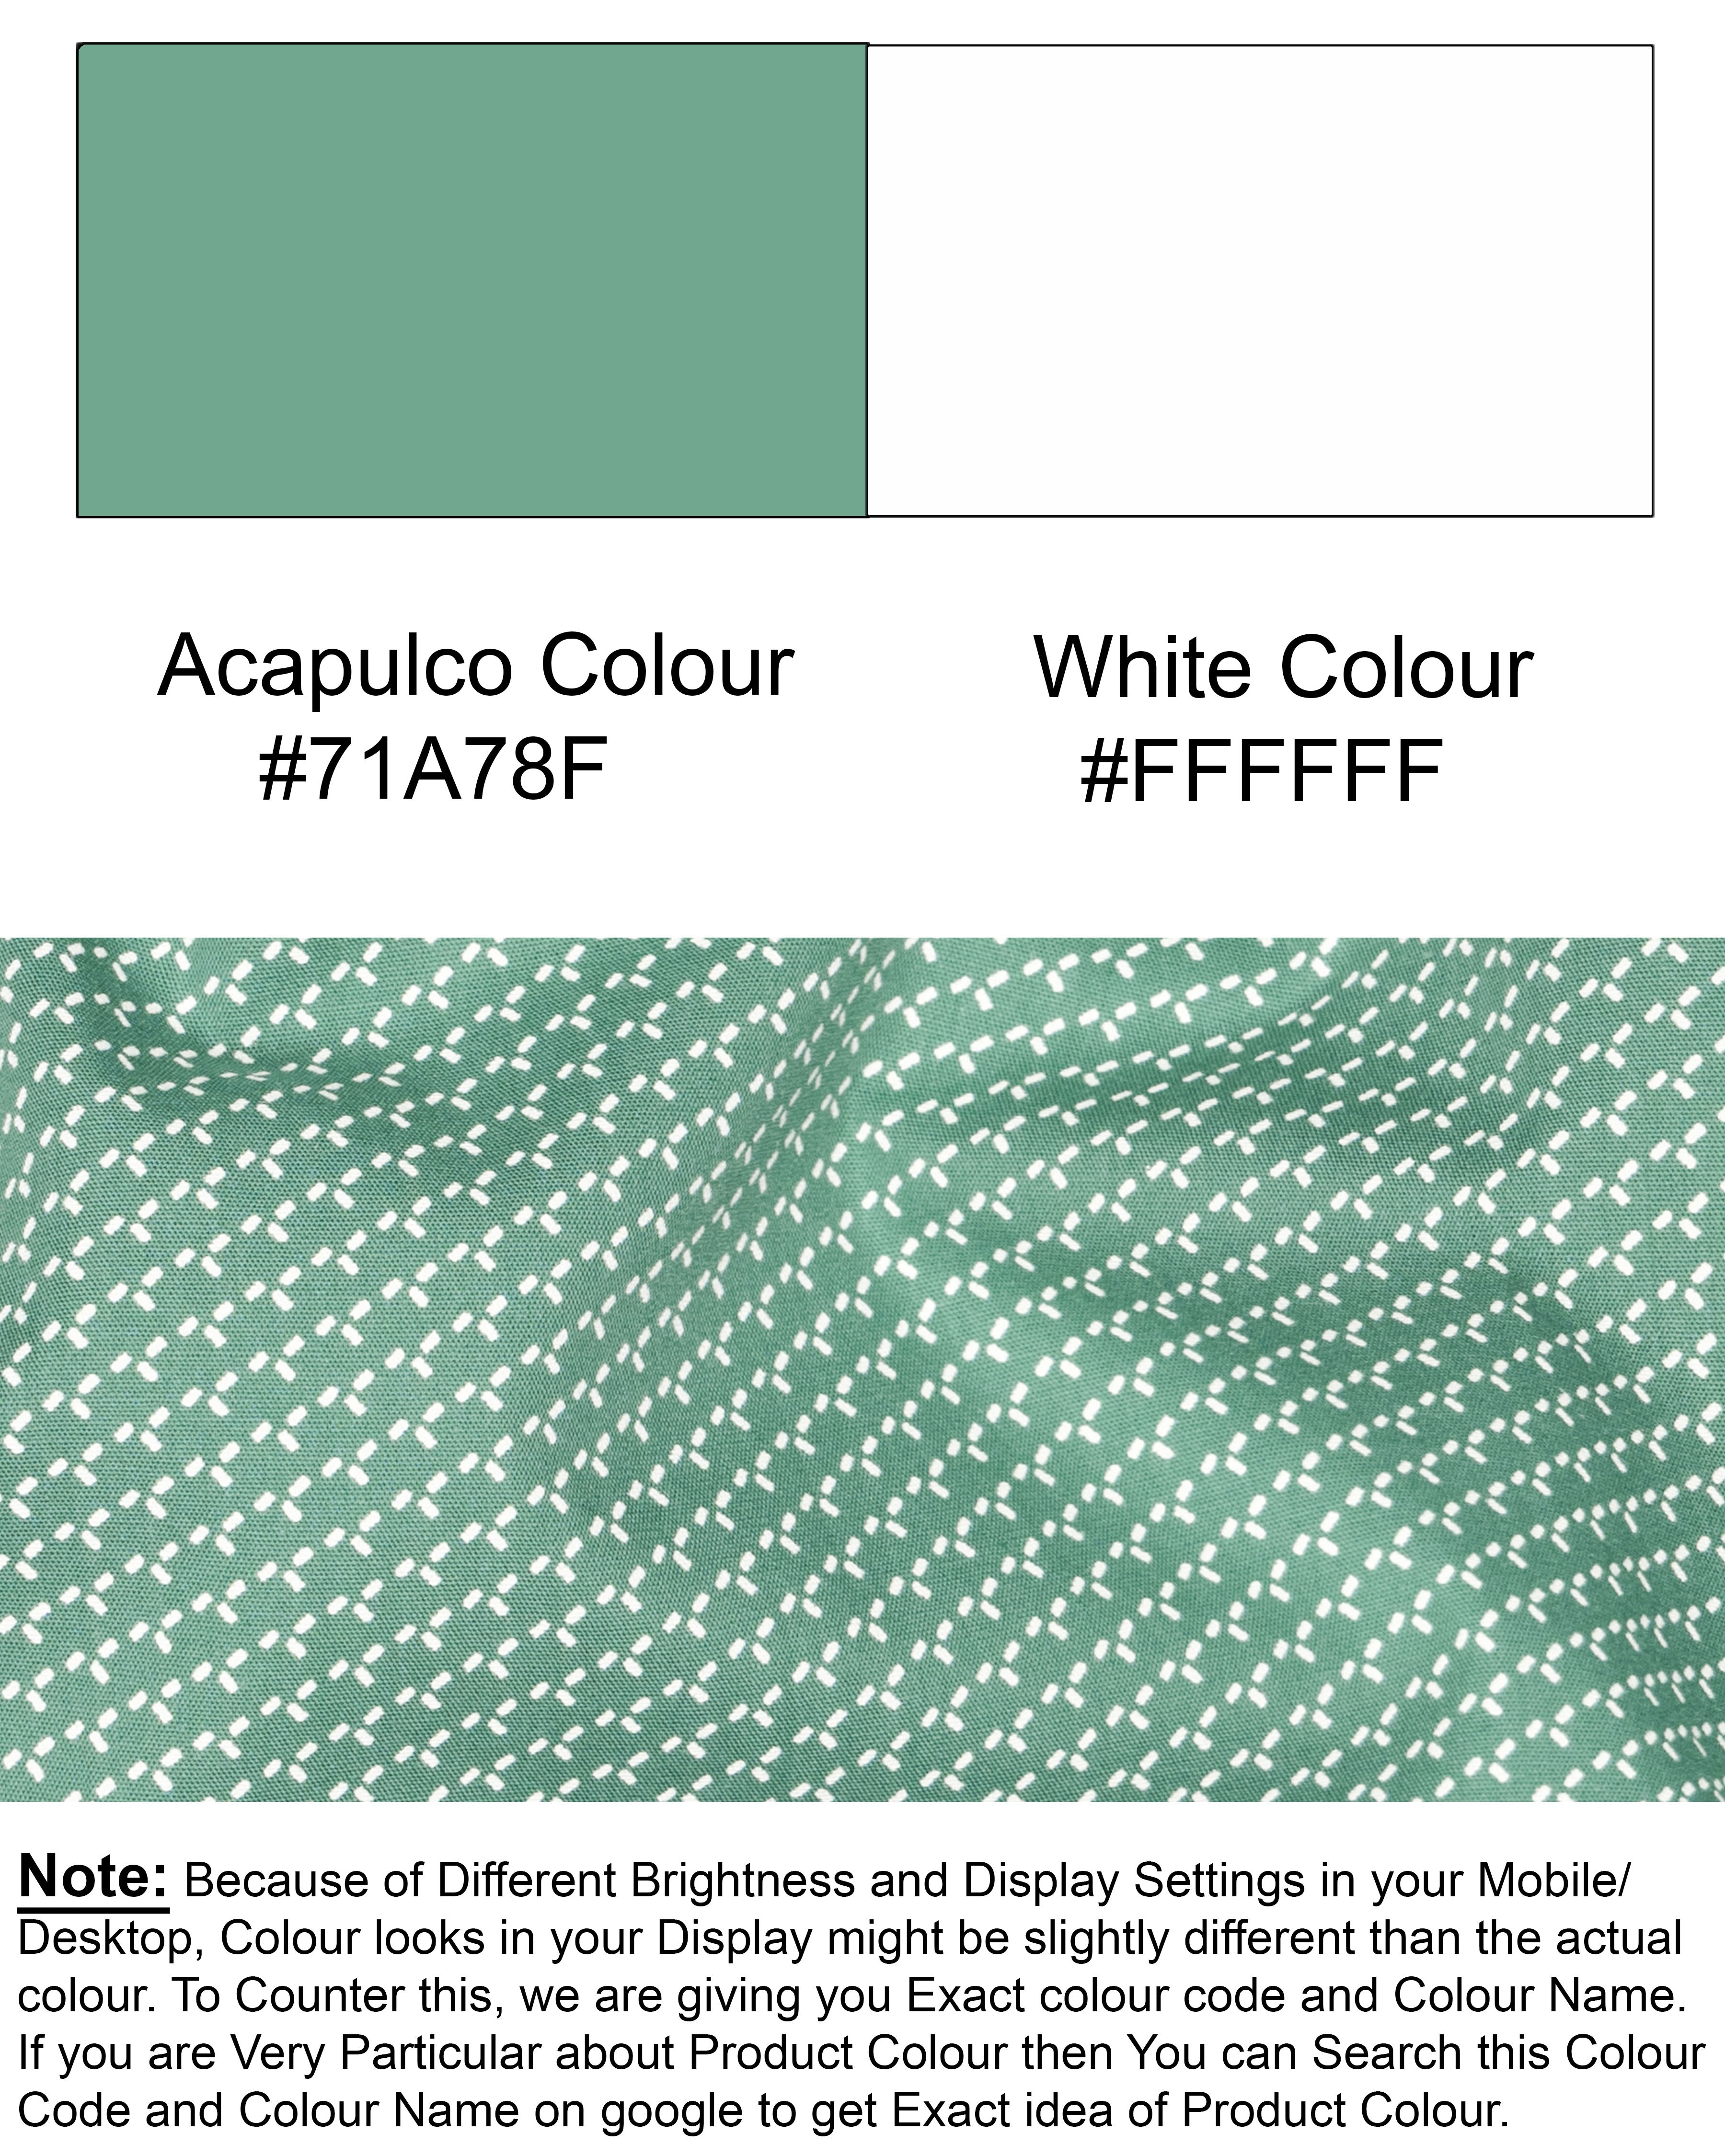 Acapulco Green Printed Premium Cotton Shirt 6109-38, 6109-H-38, 6109-39, 6109-H-39, 6109-40, 6109-H-40, 6109-42, 6109-H-42, 6109-44, 6109-H-44, 6109-46, 6109-H-46, 6109-48, 6109-H-48, 6109-50, 6109-H-50, 6109-52, 6109-H-52